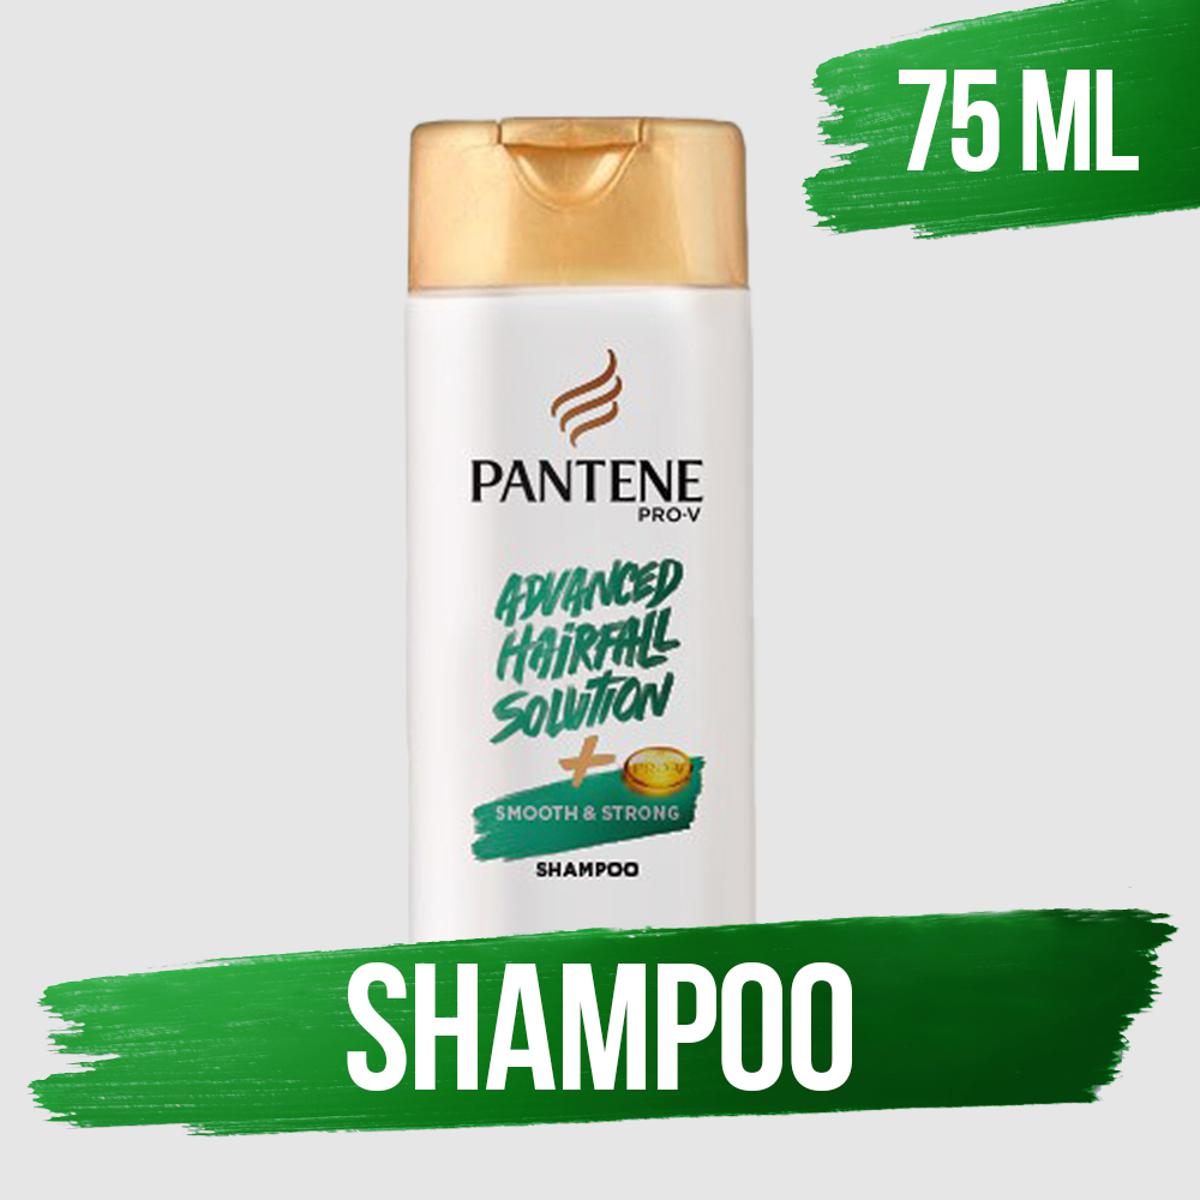 Pantene Smooth & Strong Shampoo 75 ml